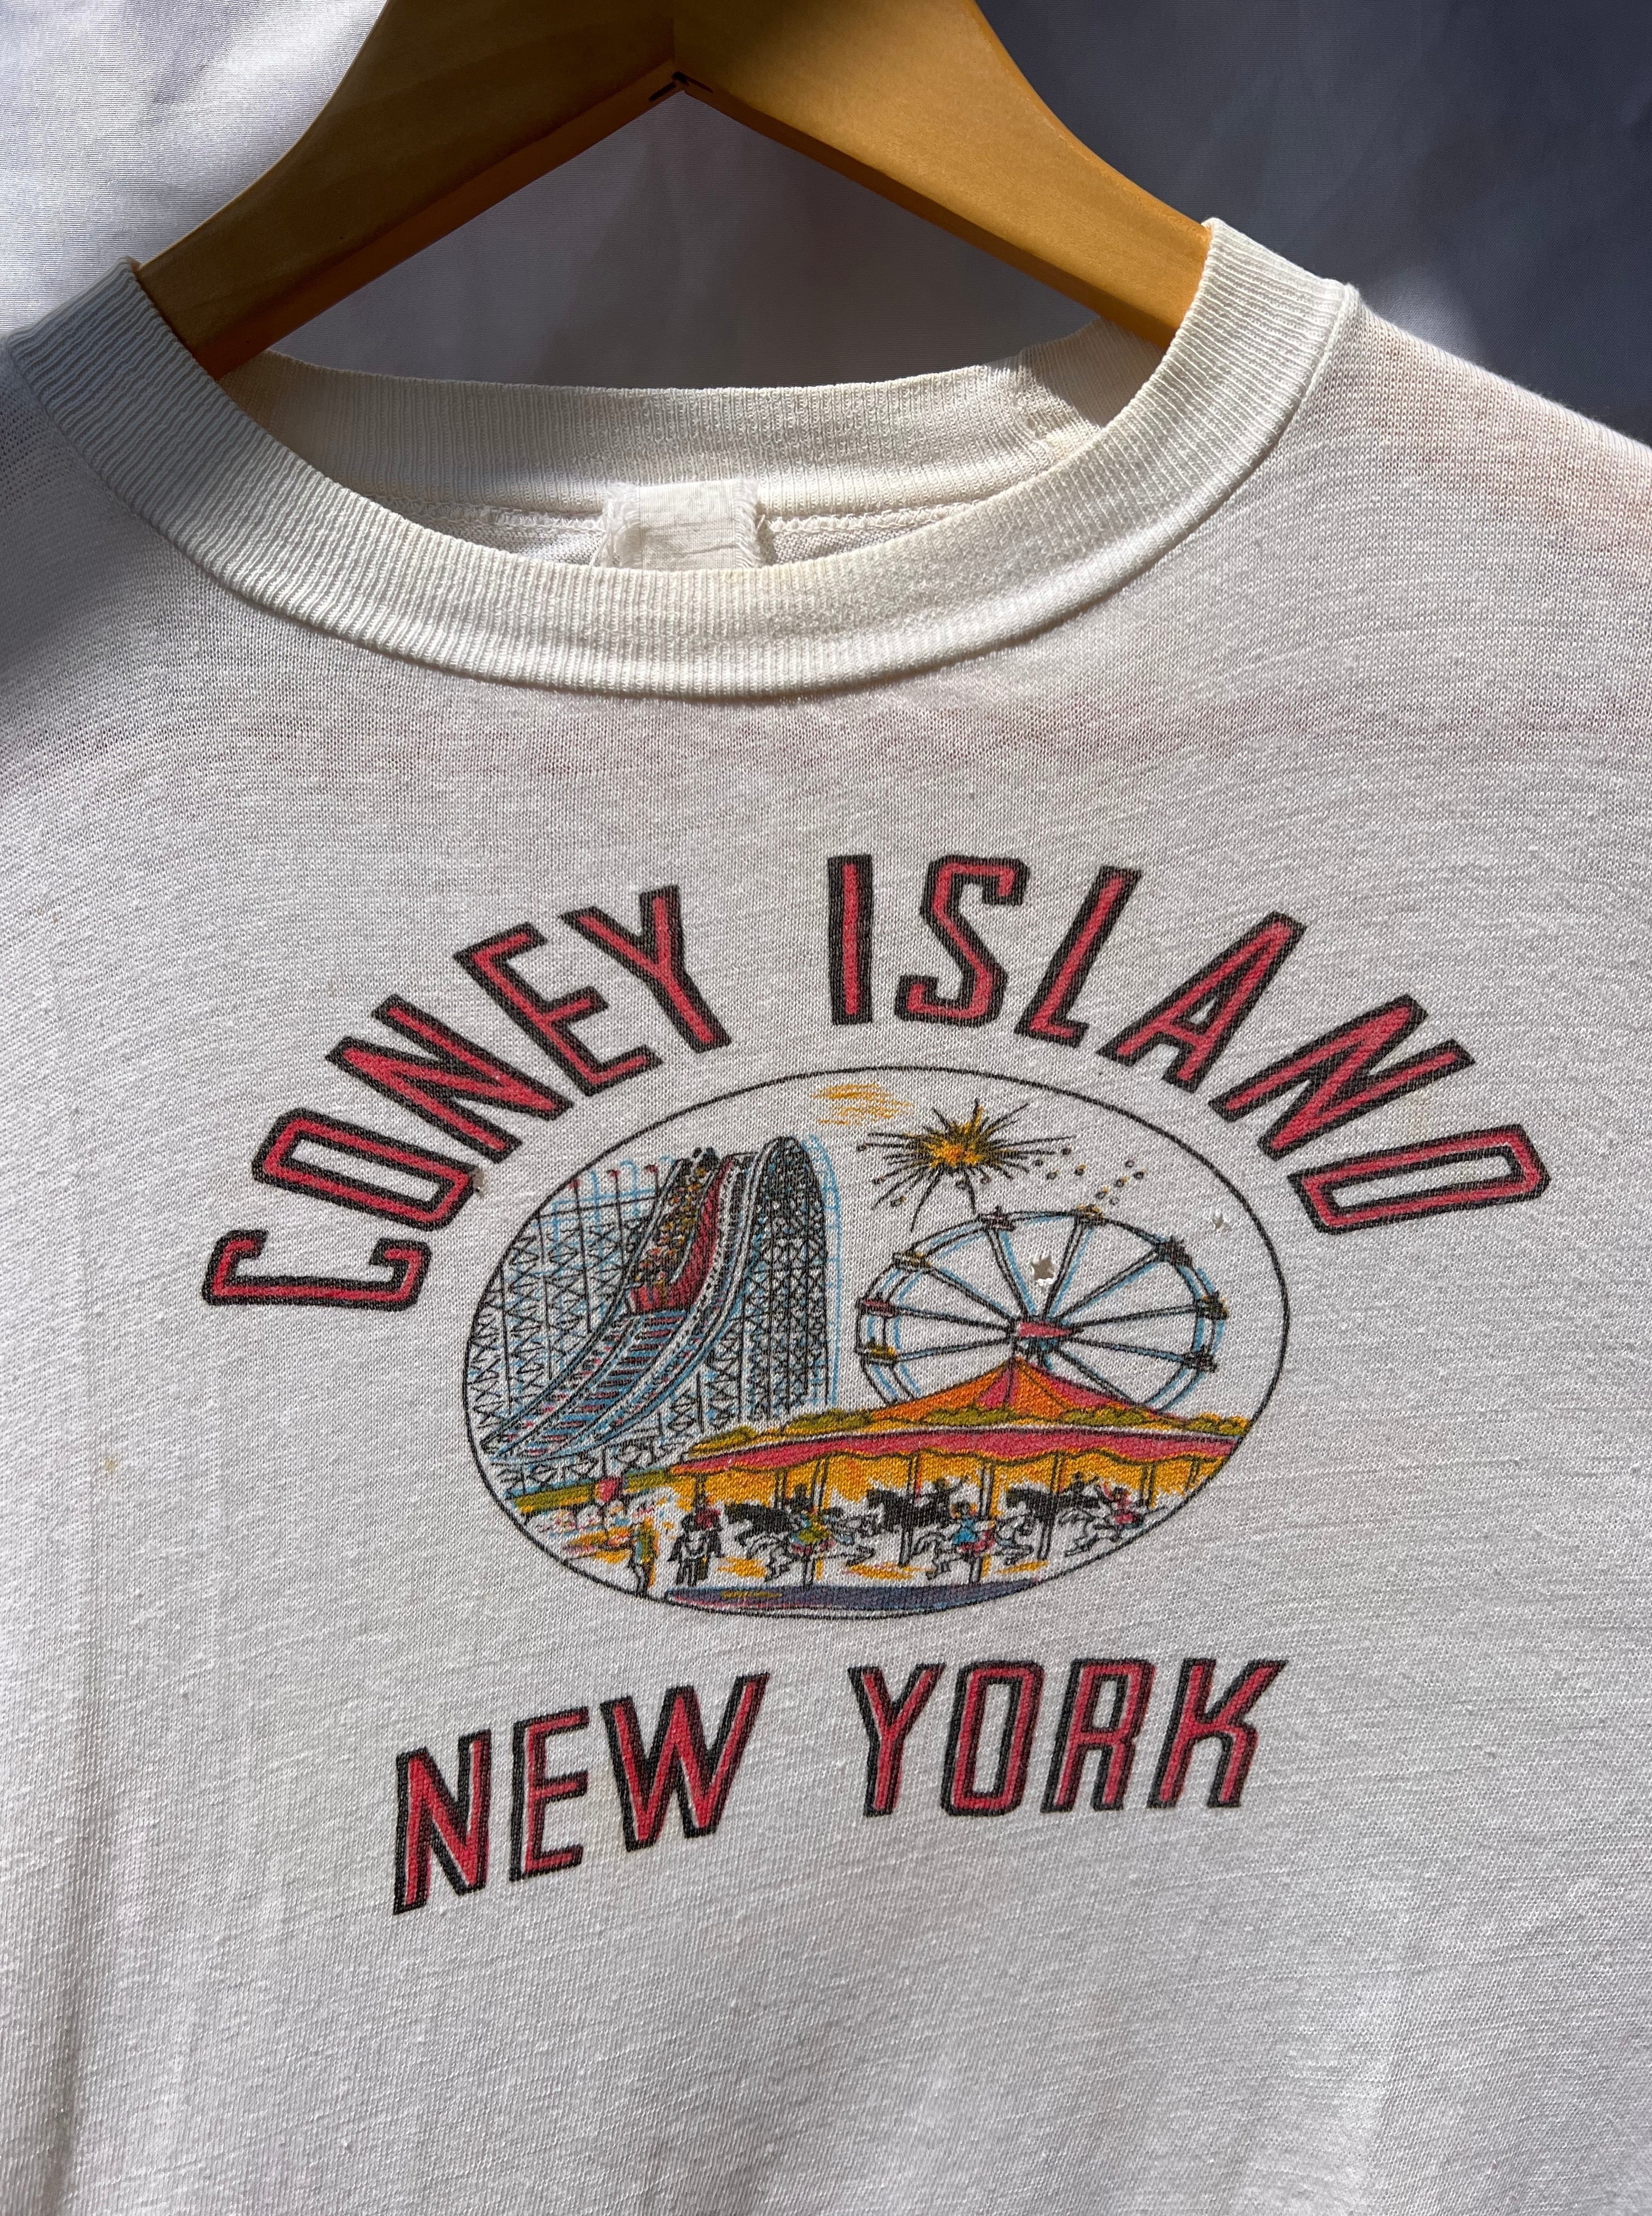 Vintage Coney Island Tee